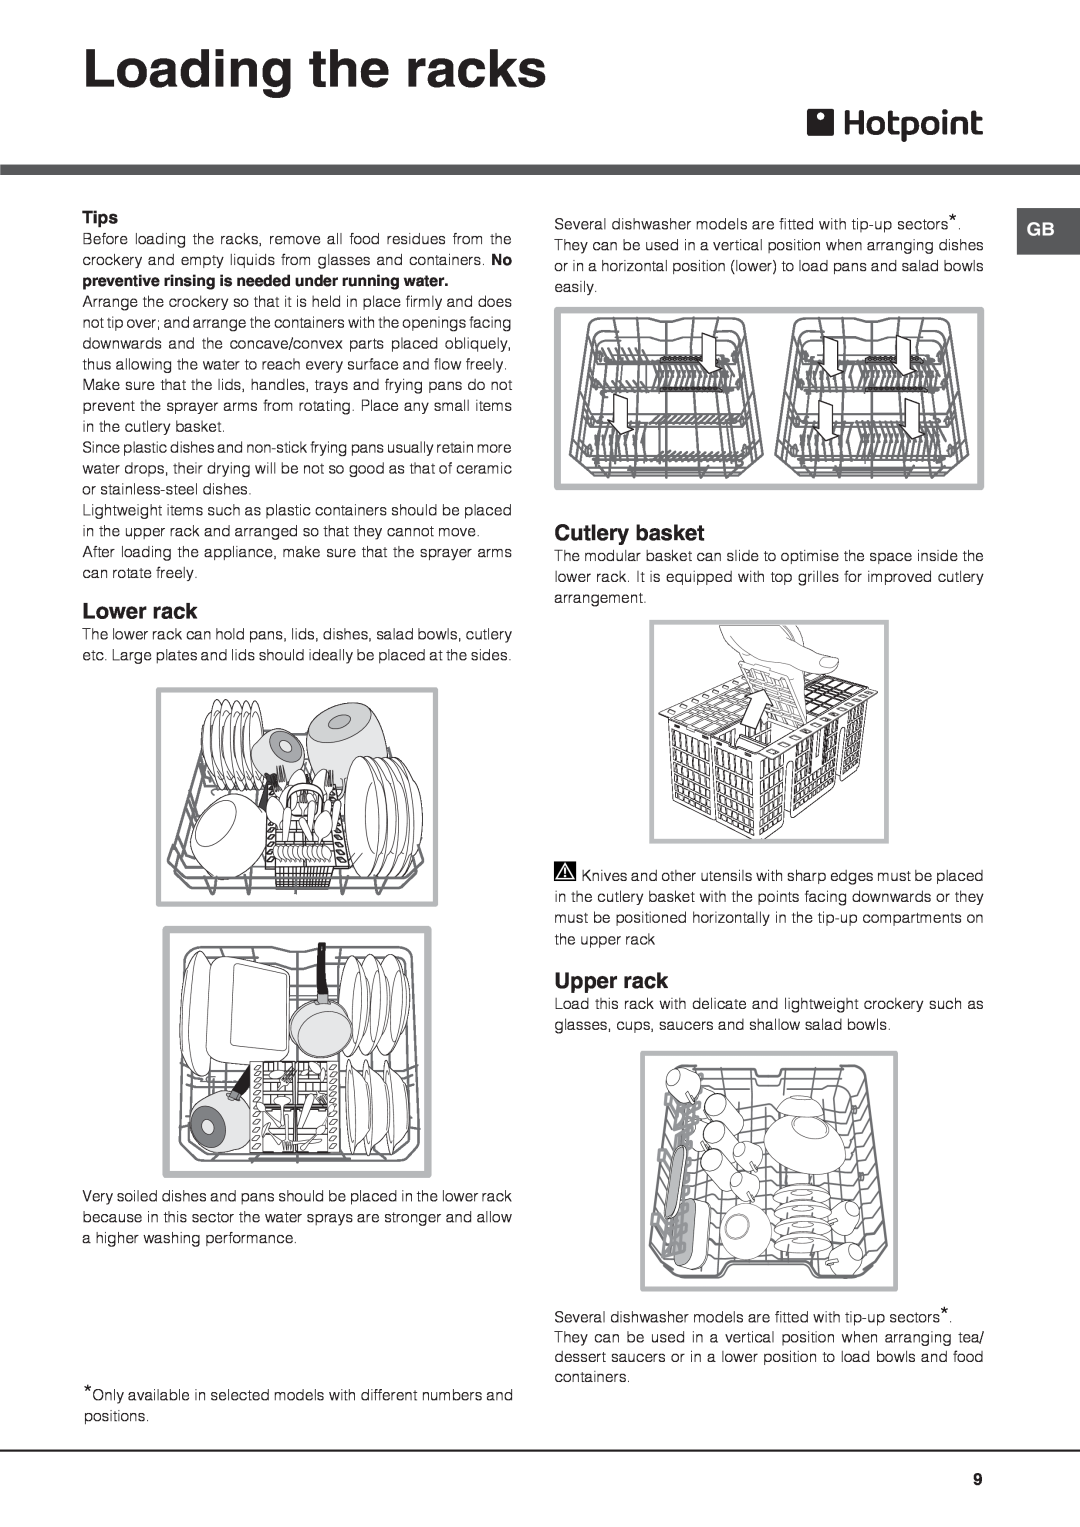 Hotpoint FDYB 11011, FDYB 10011 manual Loading the racks, Lower rack, Cutlery basket, Upper rack, Tips 